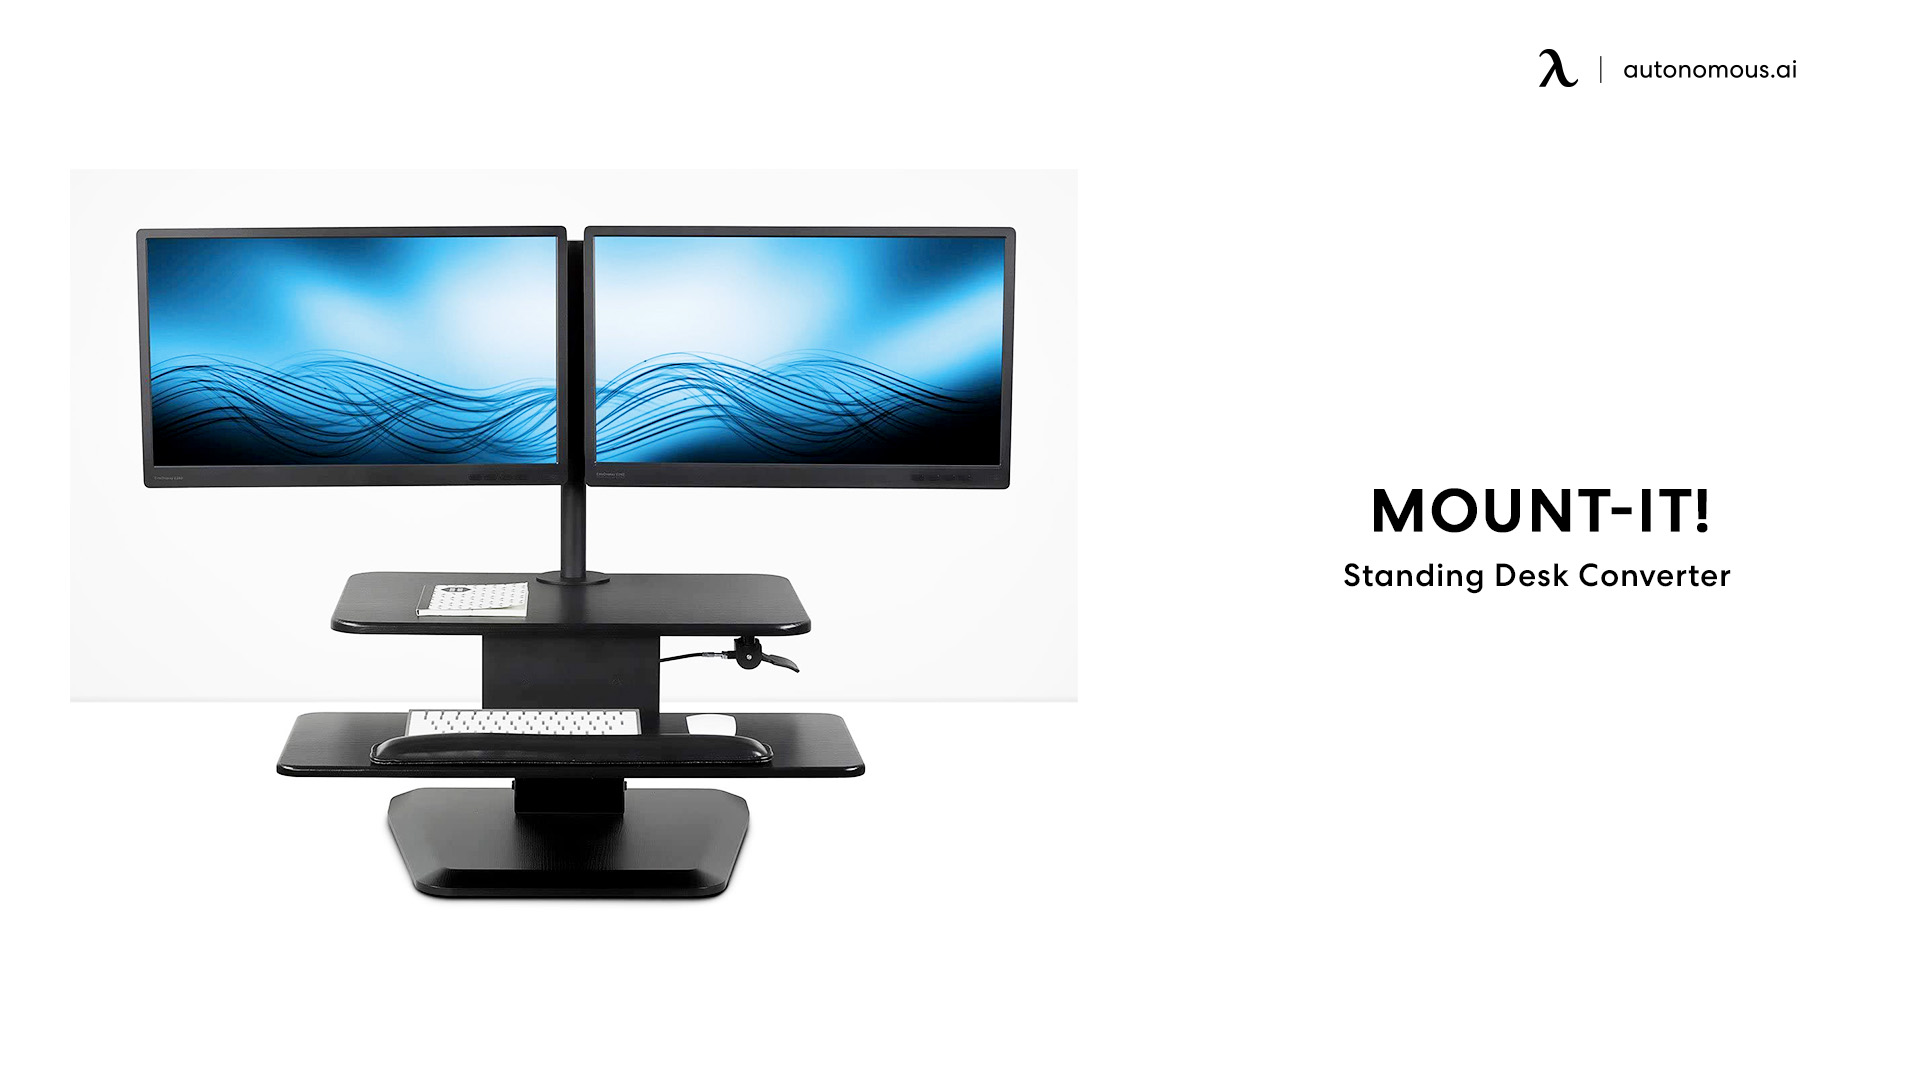 Mount-It! Standing Desk Converter